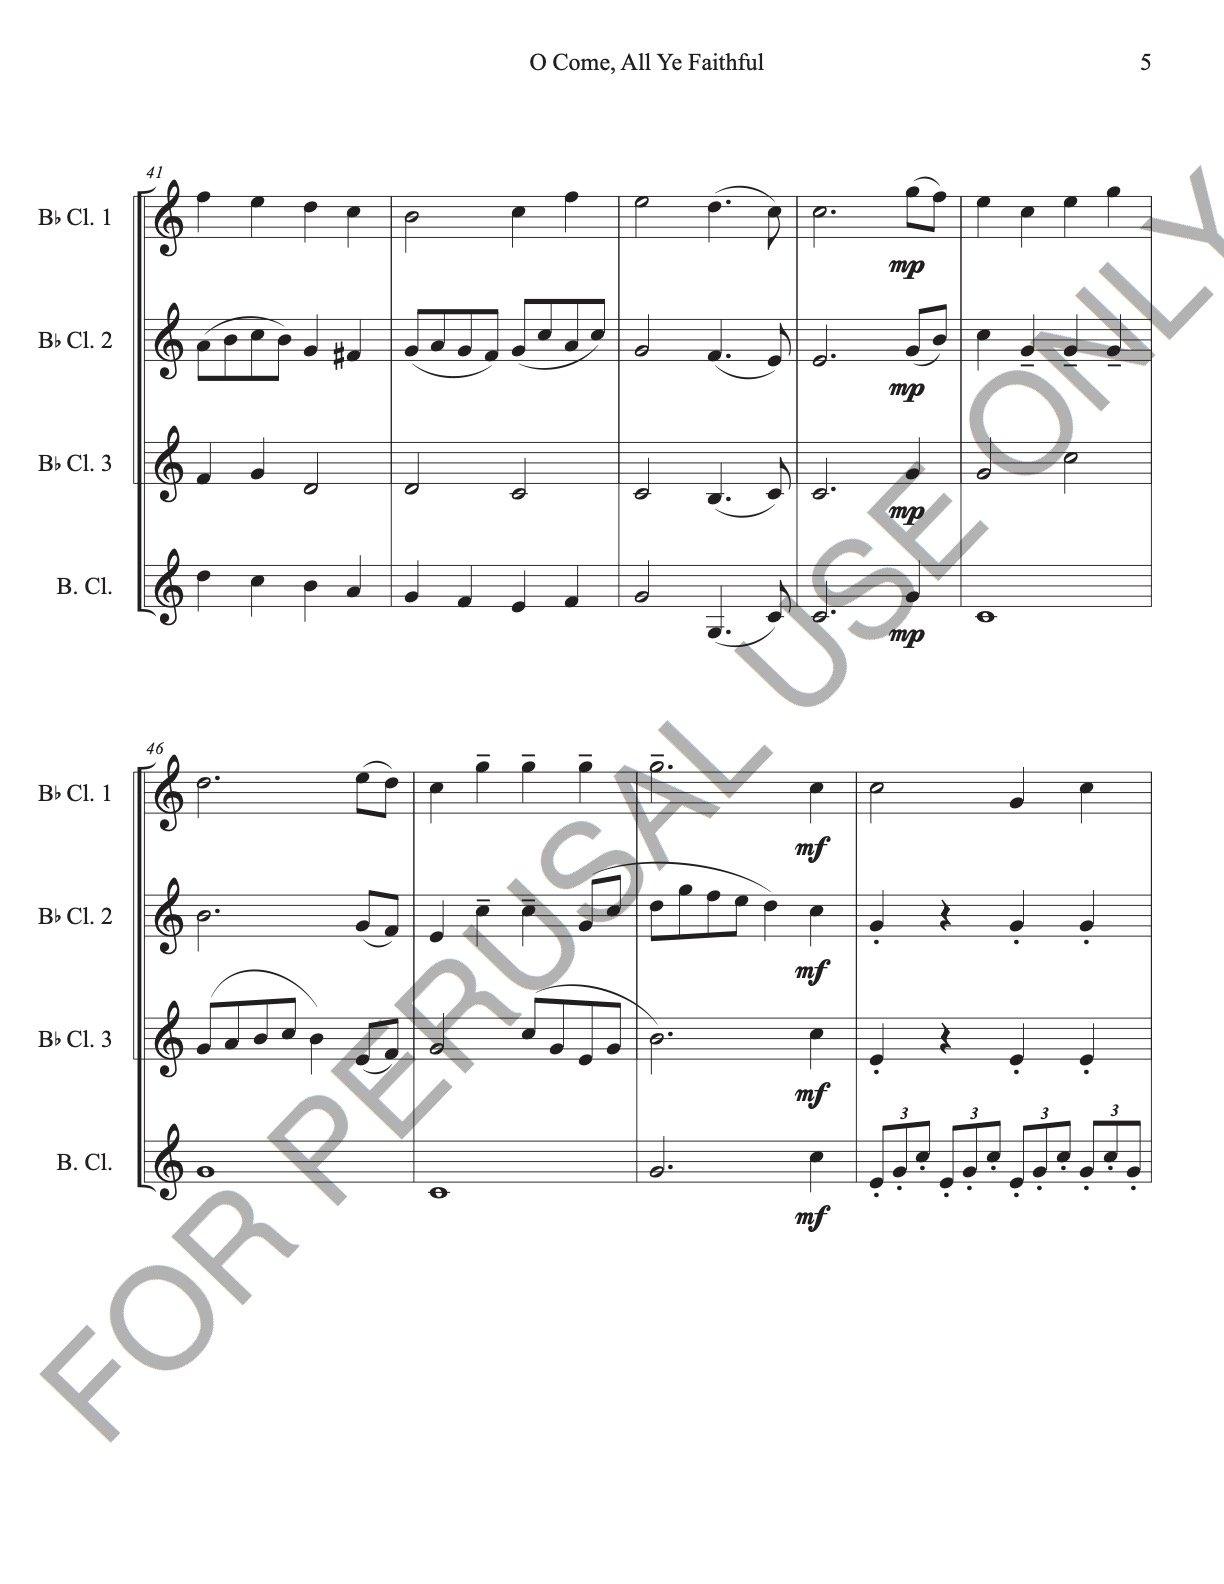 O Come, All Ye Faithful for Clarinet Quartet - ChaipruckMekara